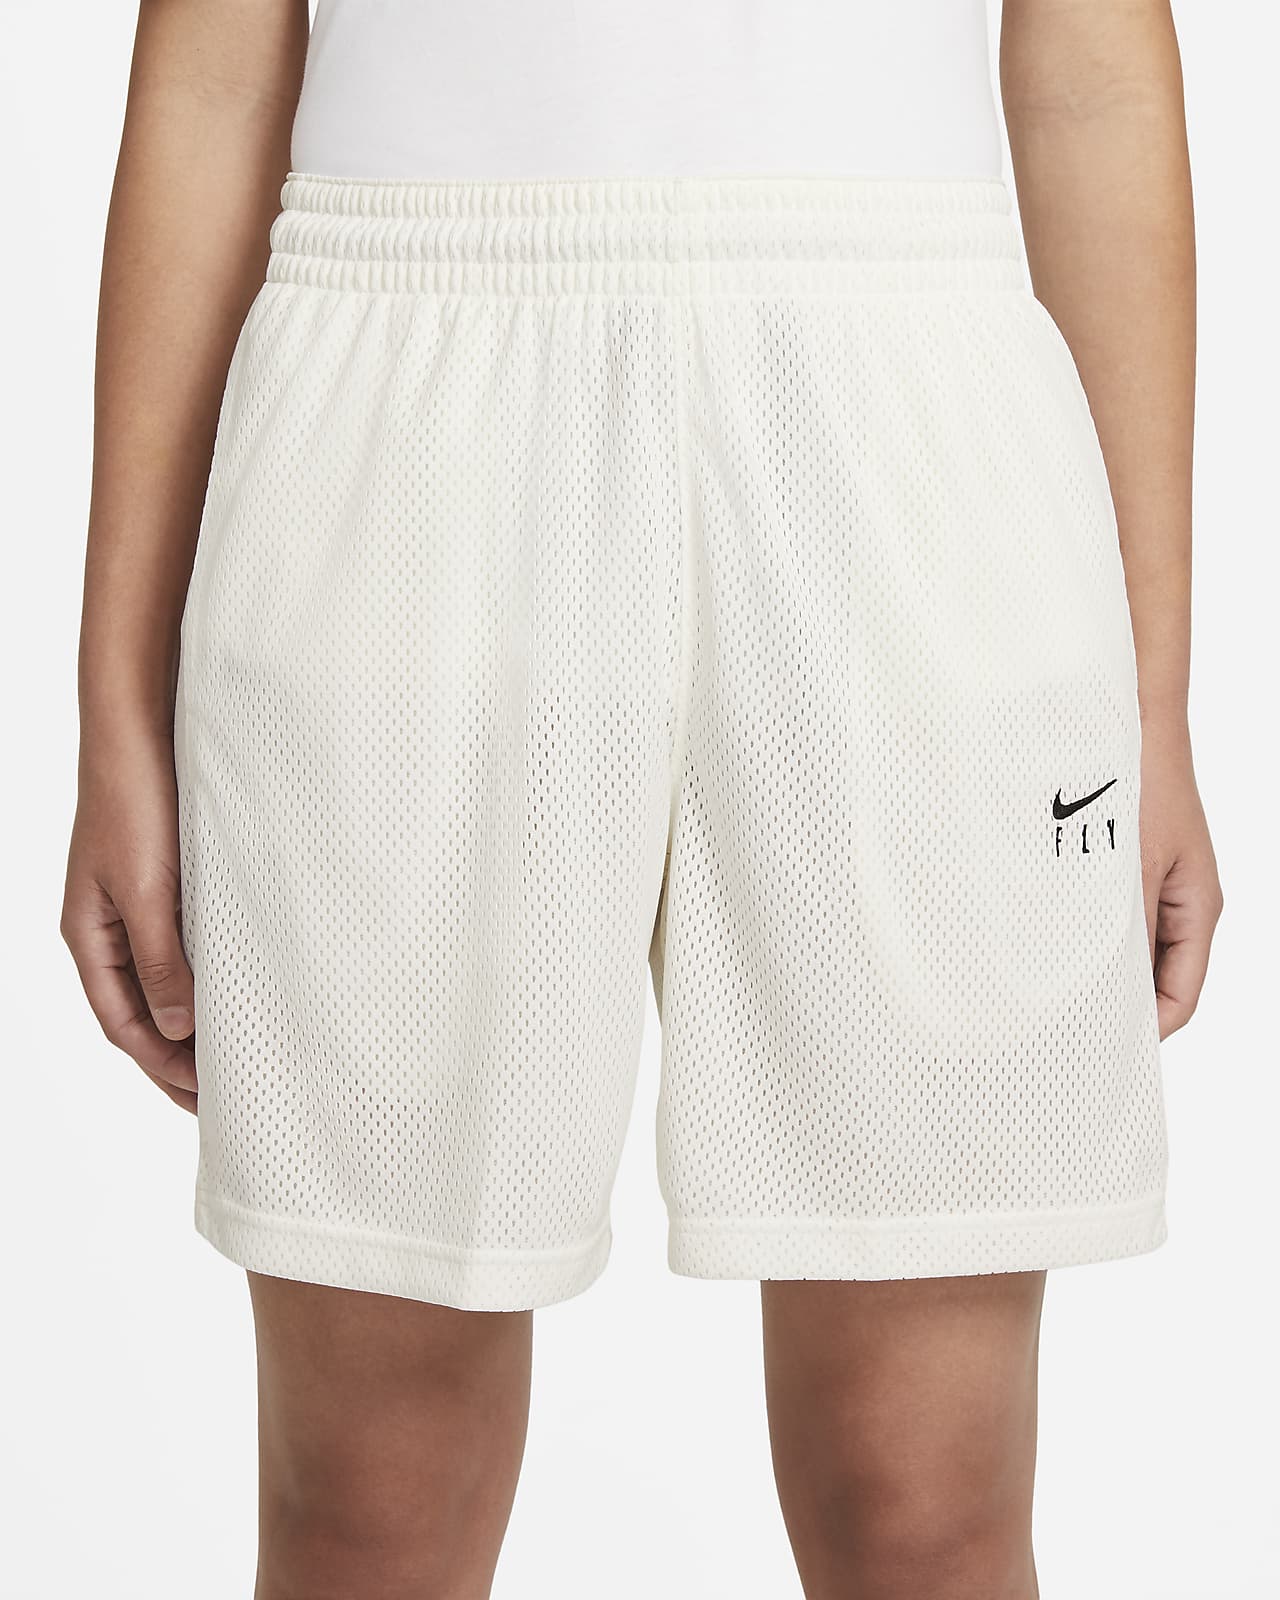 women's plus size basketball shorts